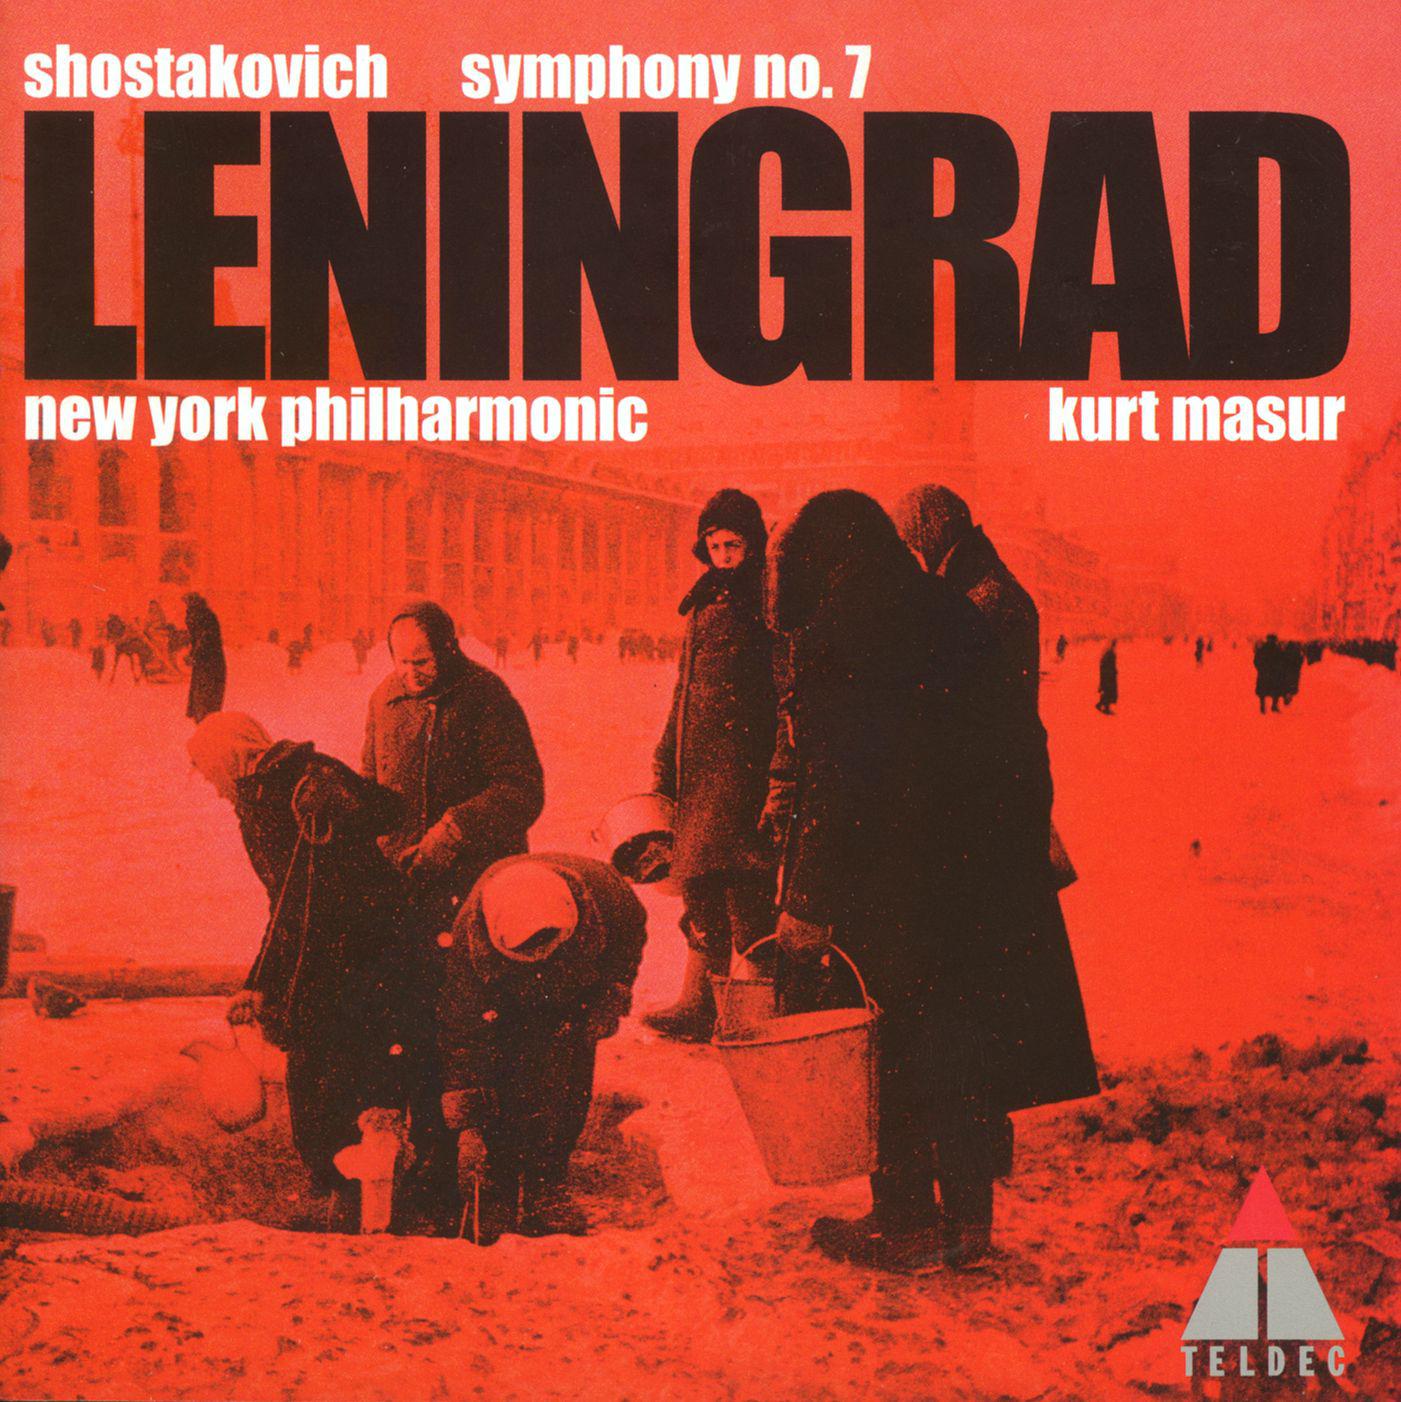 Shostakovich : Symphony No.7 in C major Op.60, 'Leningrad' : II Moderato - poco allegretto